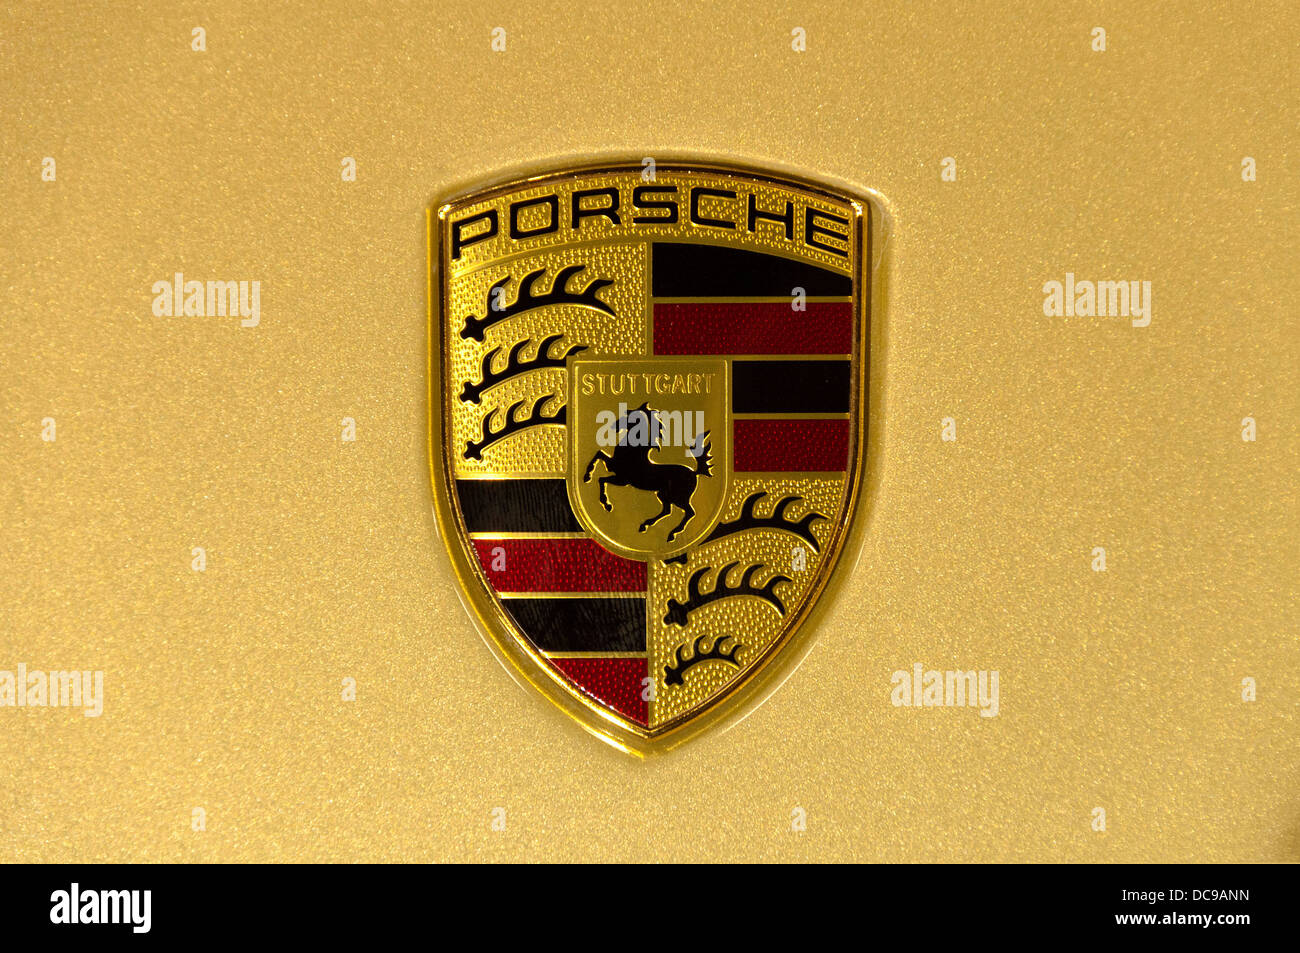 Porsche Poster Projects :: Photos, videos, logos, illustrations